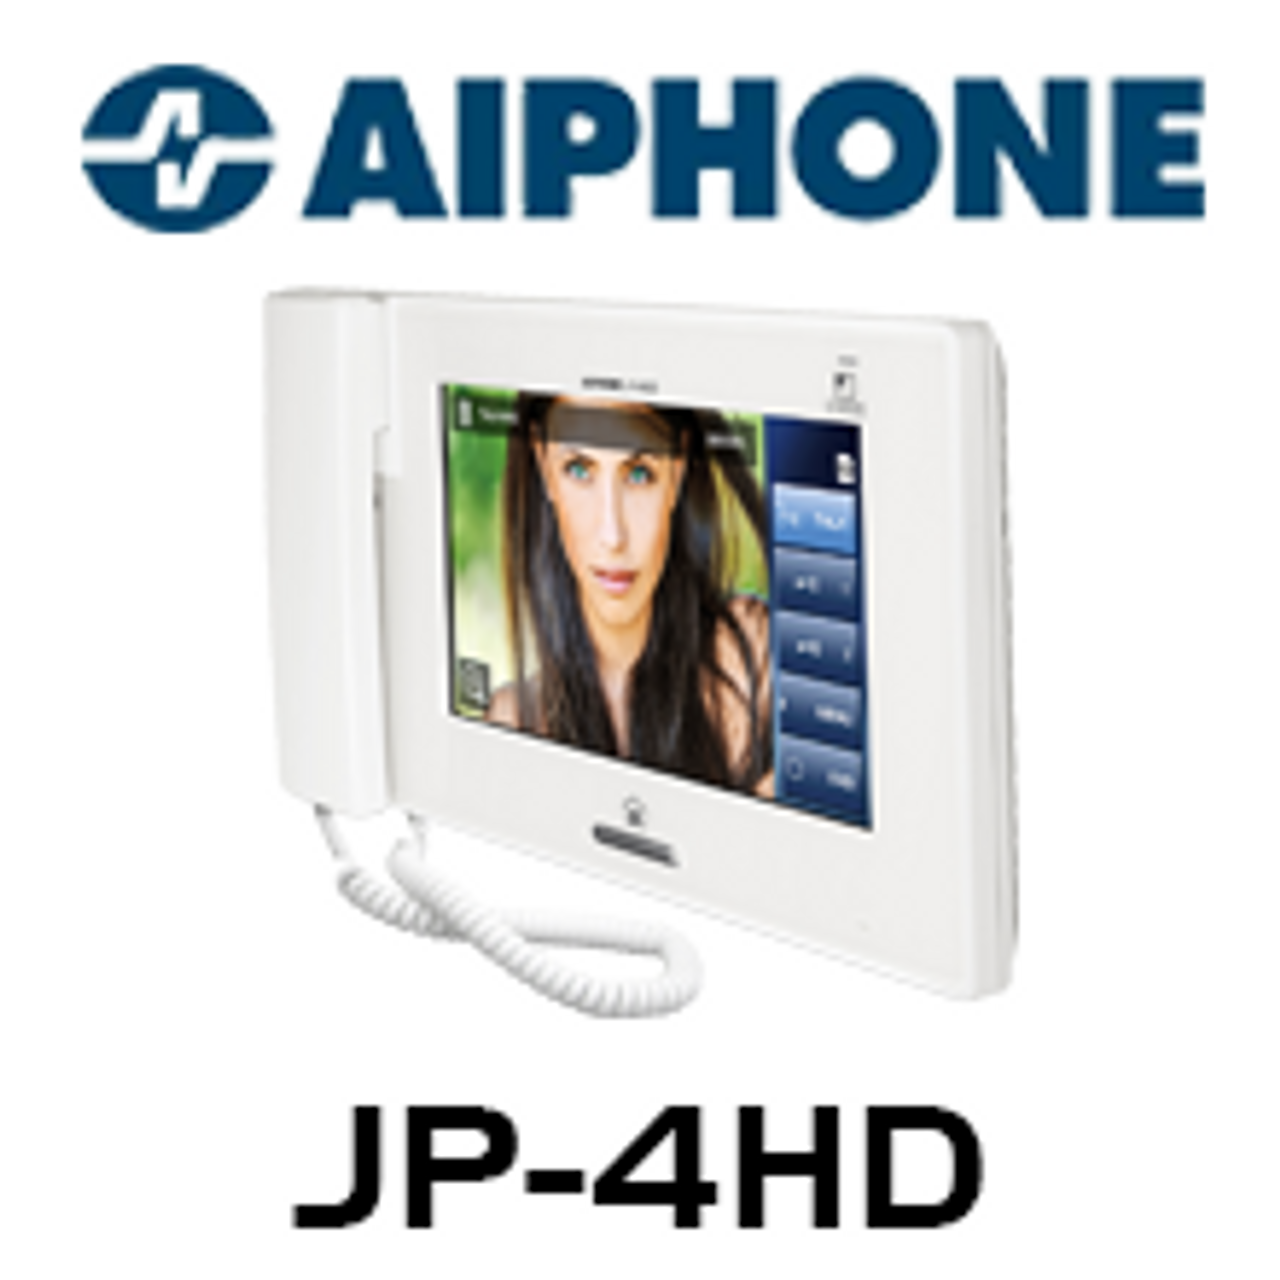 Aiphone JP-4HD 7" LCD Touch Screen PTZ Video Intercom - Sub Master Station